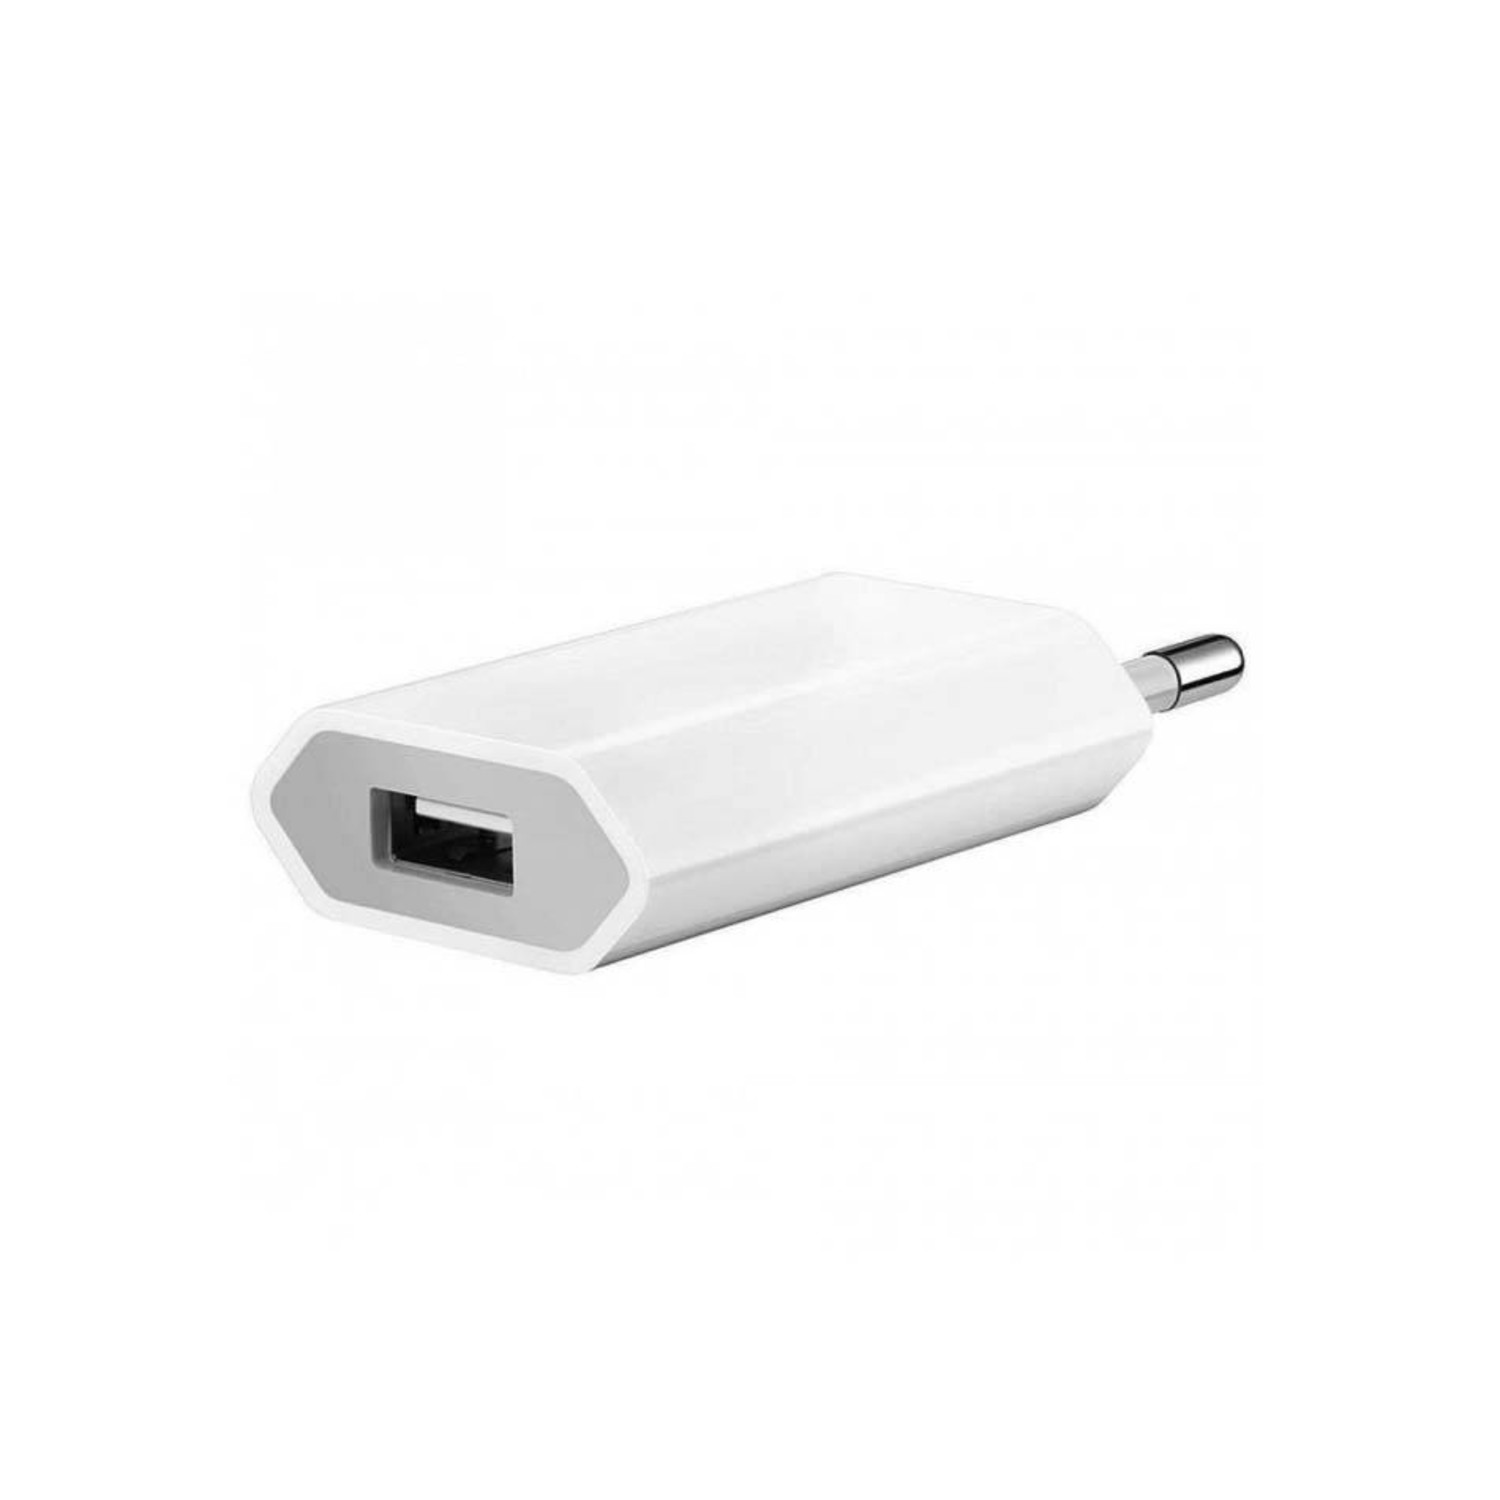 Occlusie Gespierd kompas Apple 5W MD813 1-Poort USB Lader - Externe Batterij